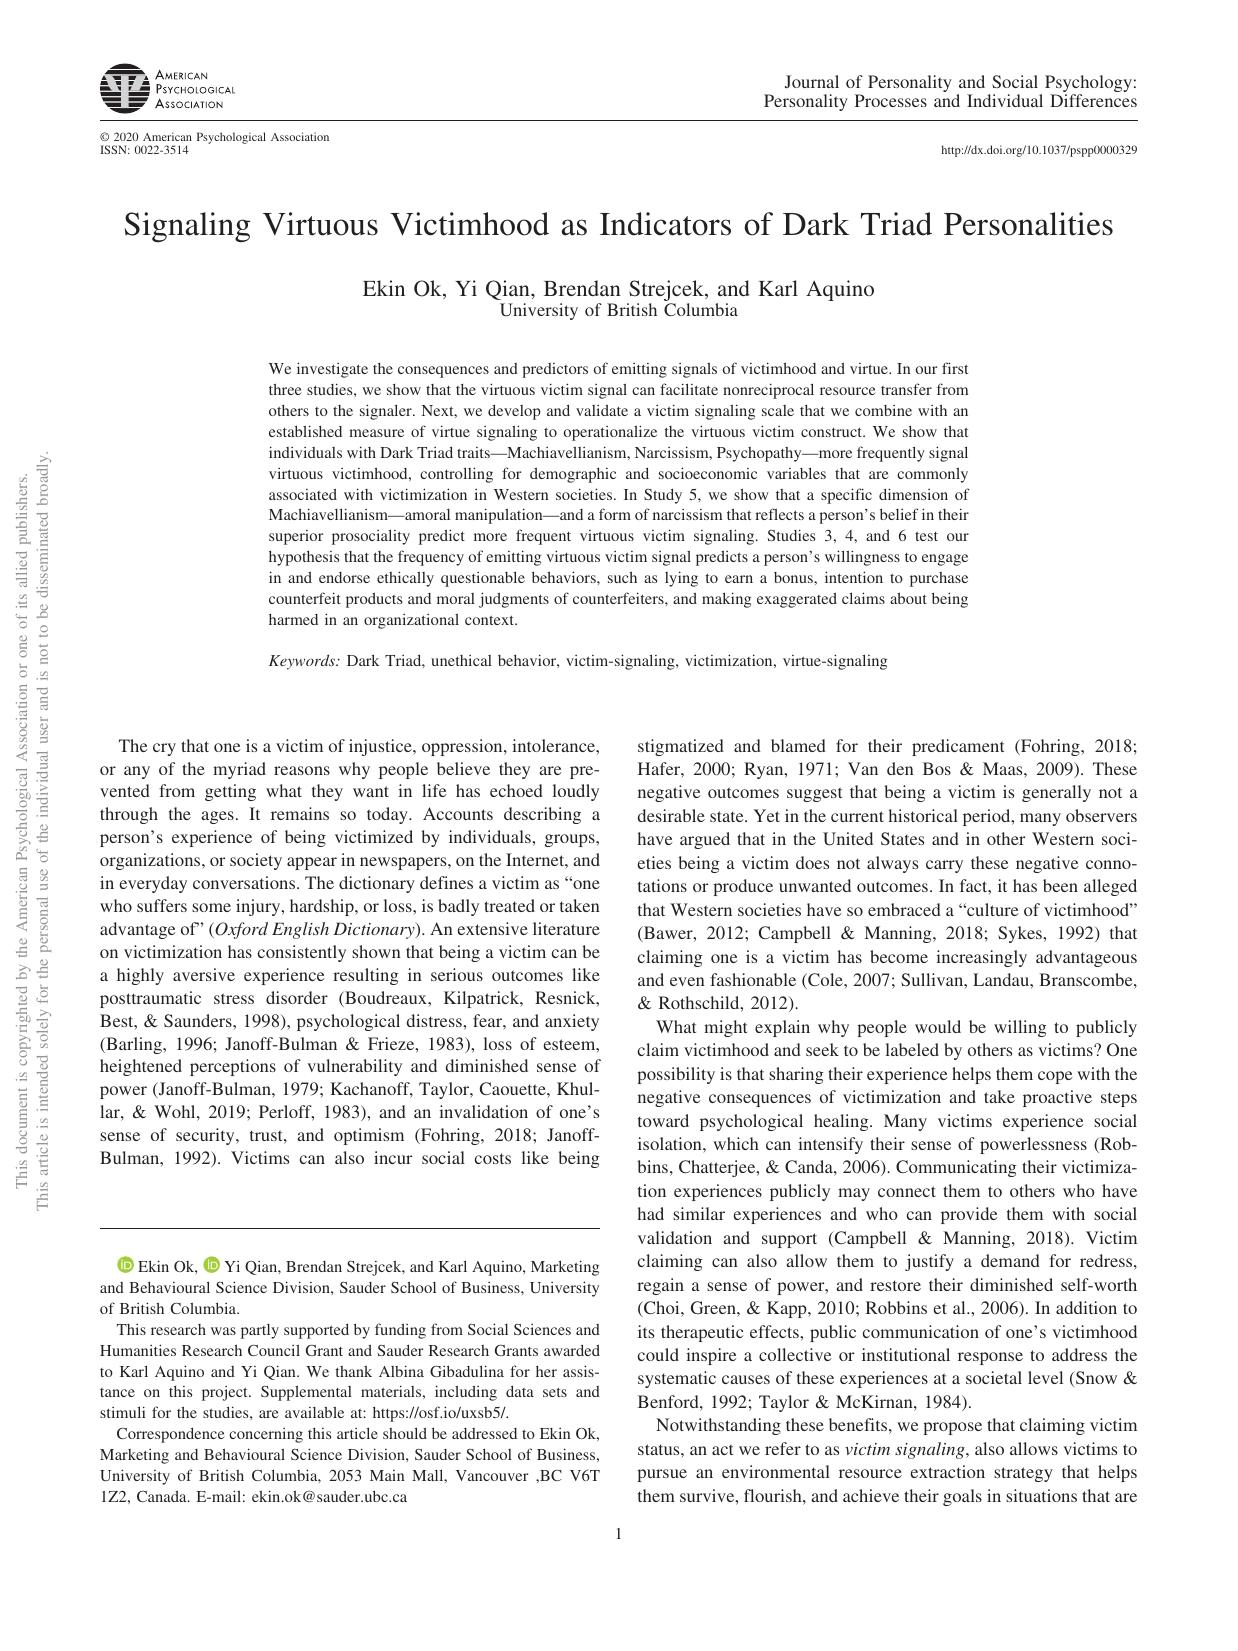 Signaling virtuous victimhood as indicators of Dark Triad personalities - Paper